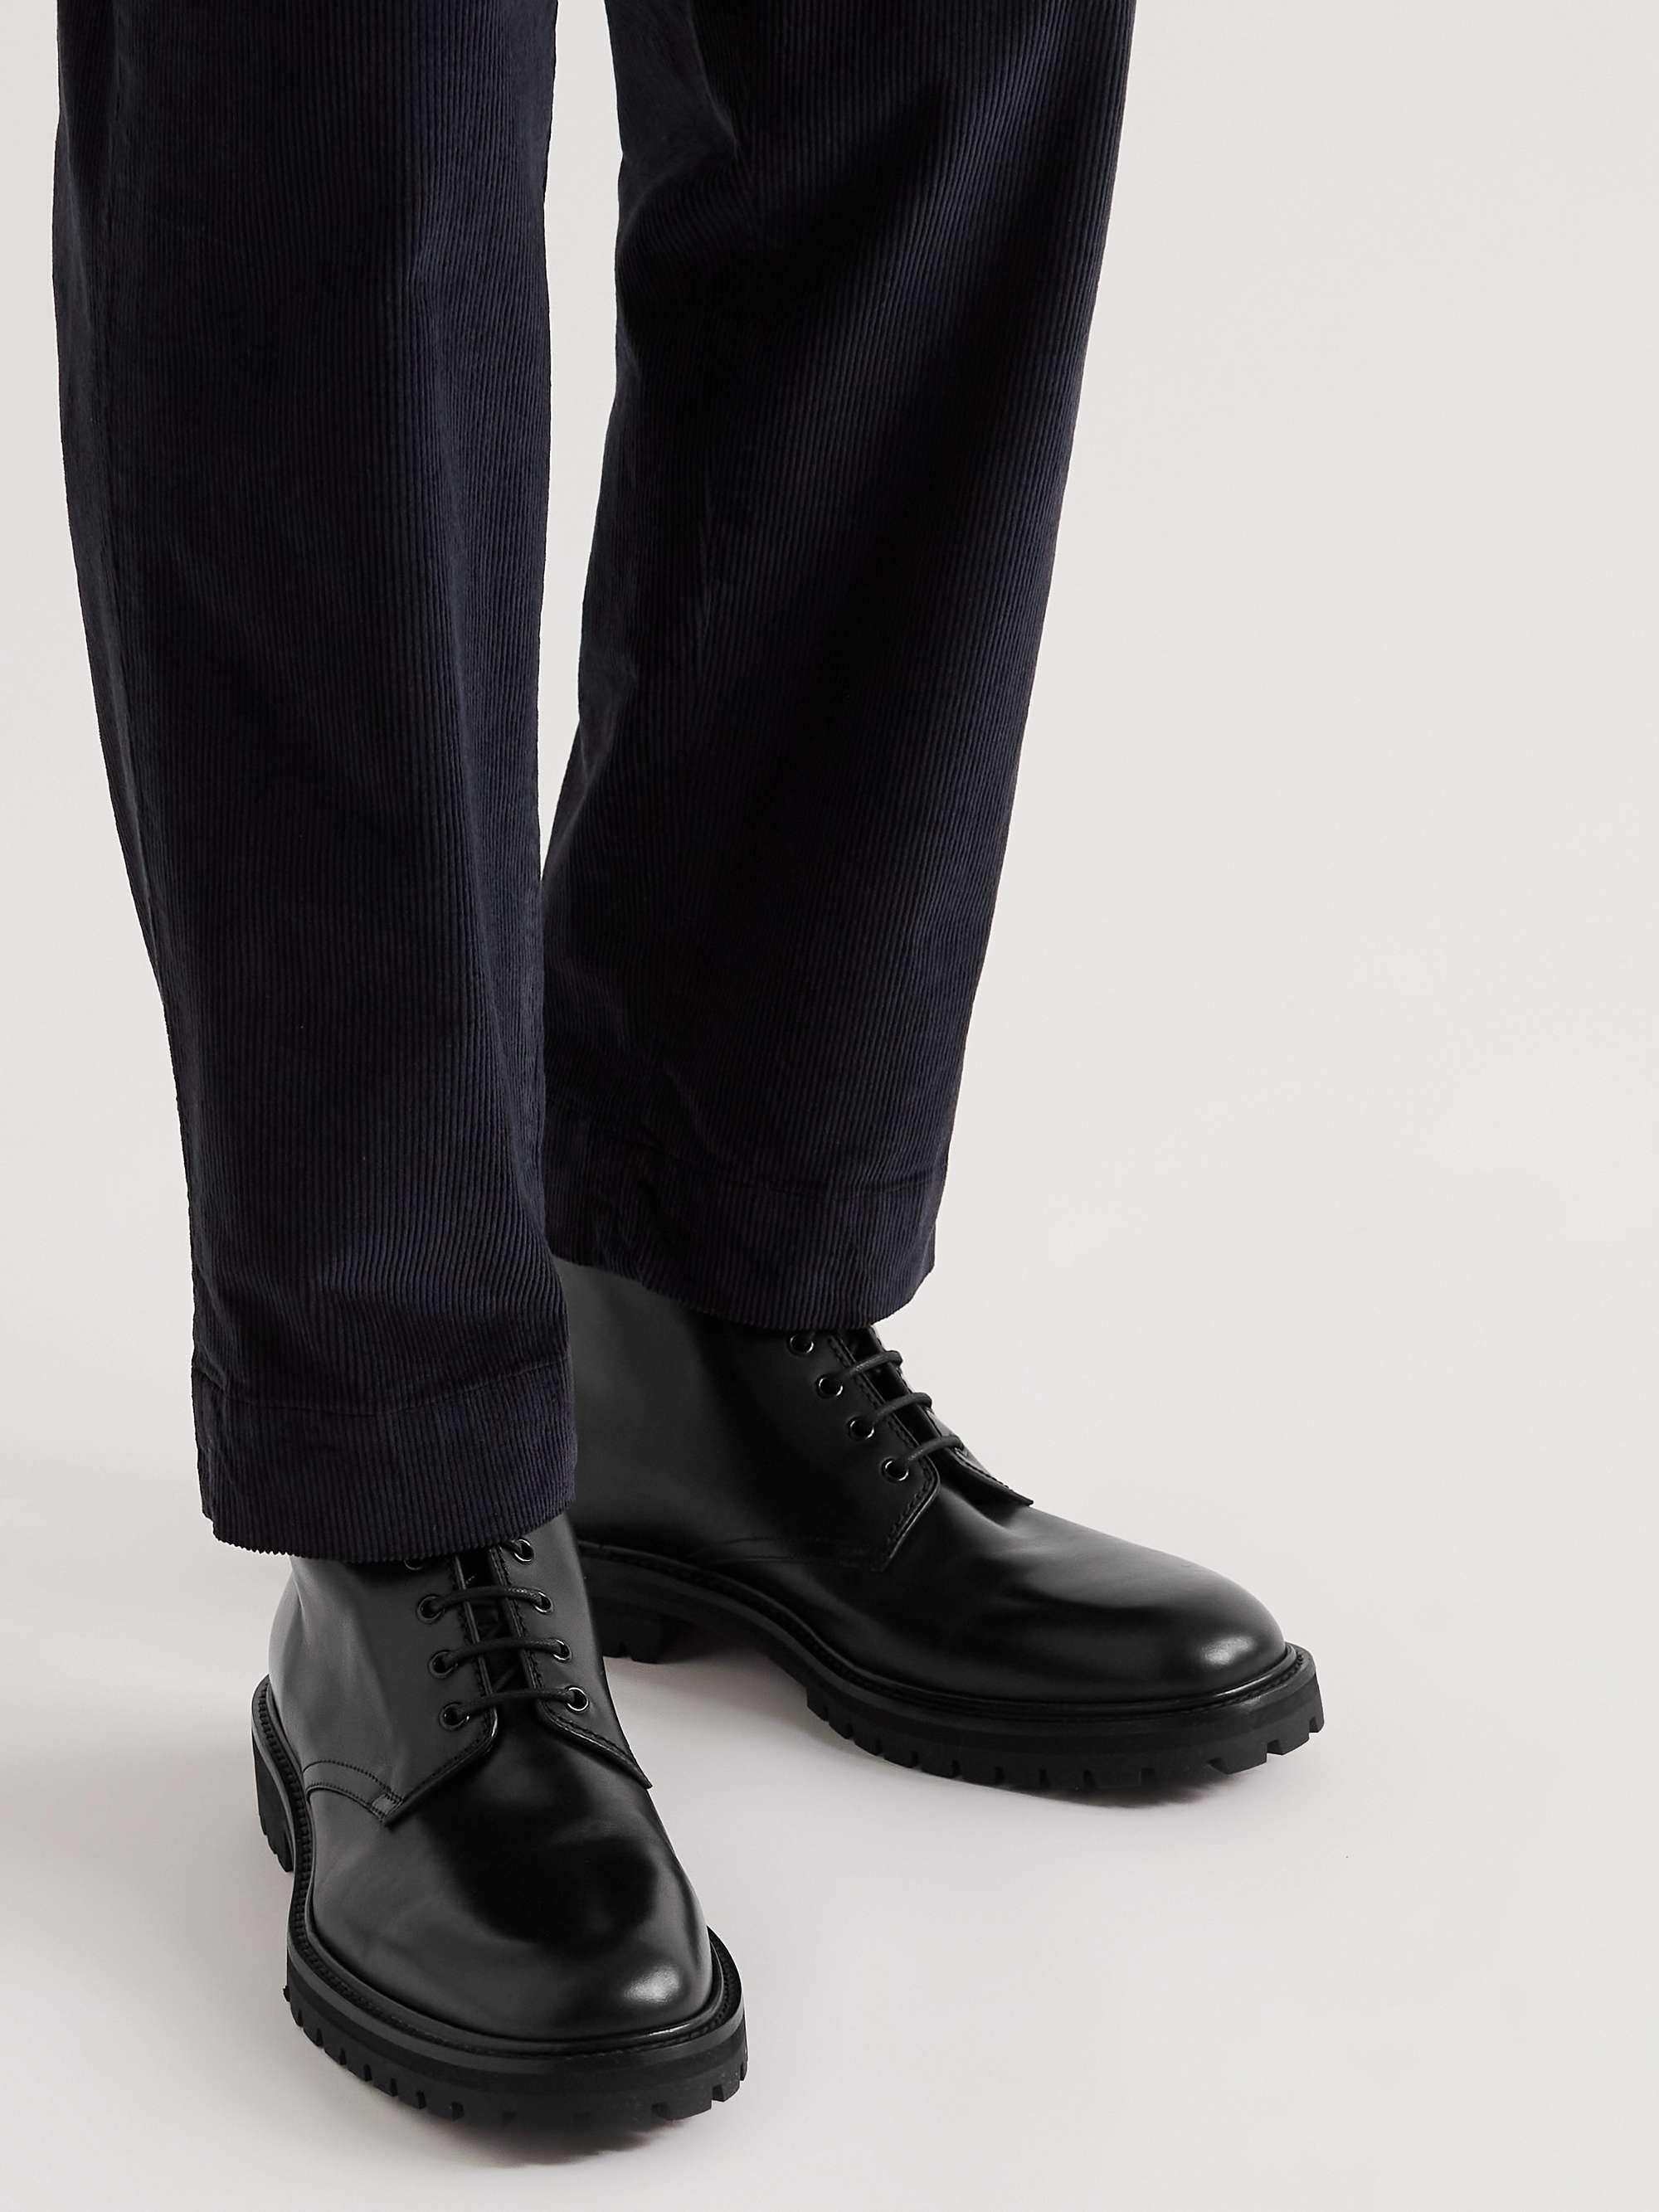 Black Leather Boots | OFFICINE CREATIVE | MR PORTER